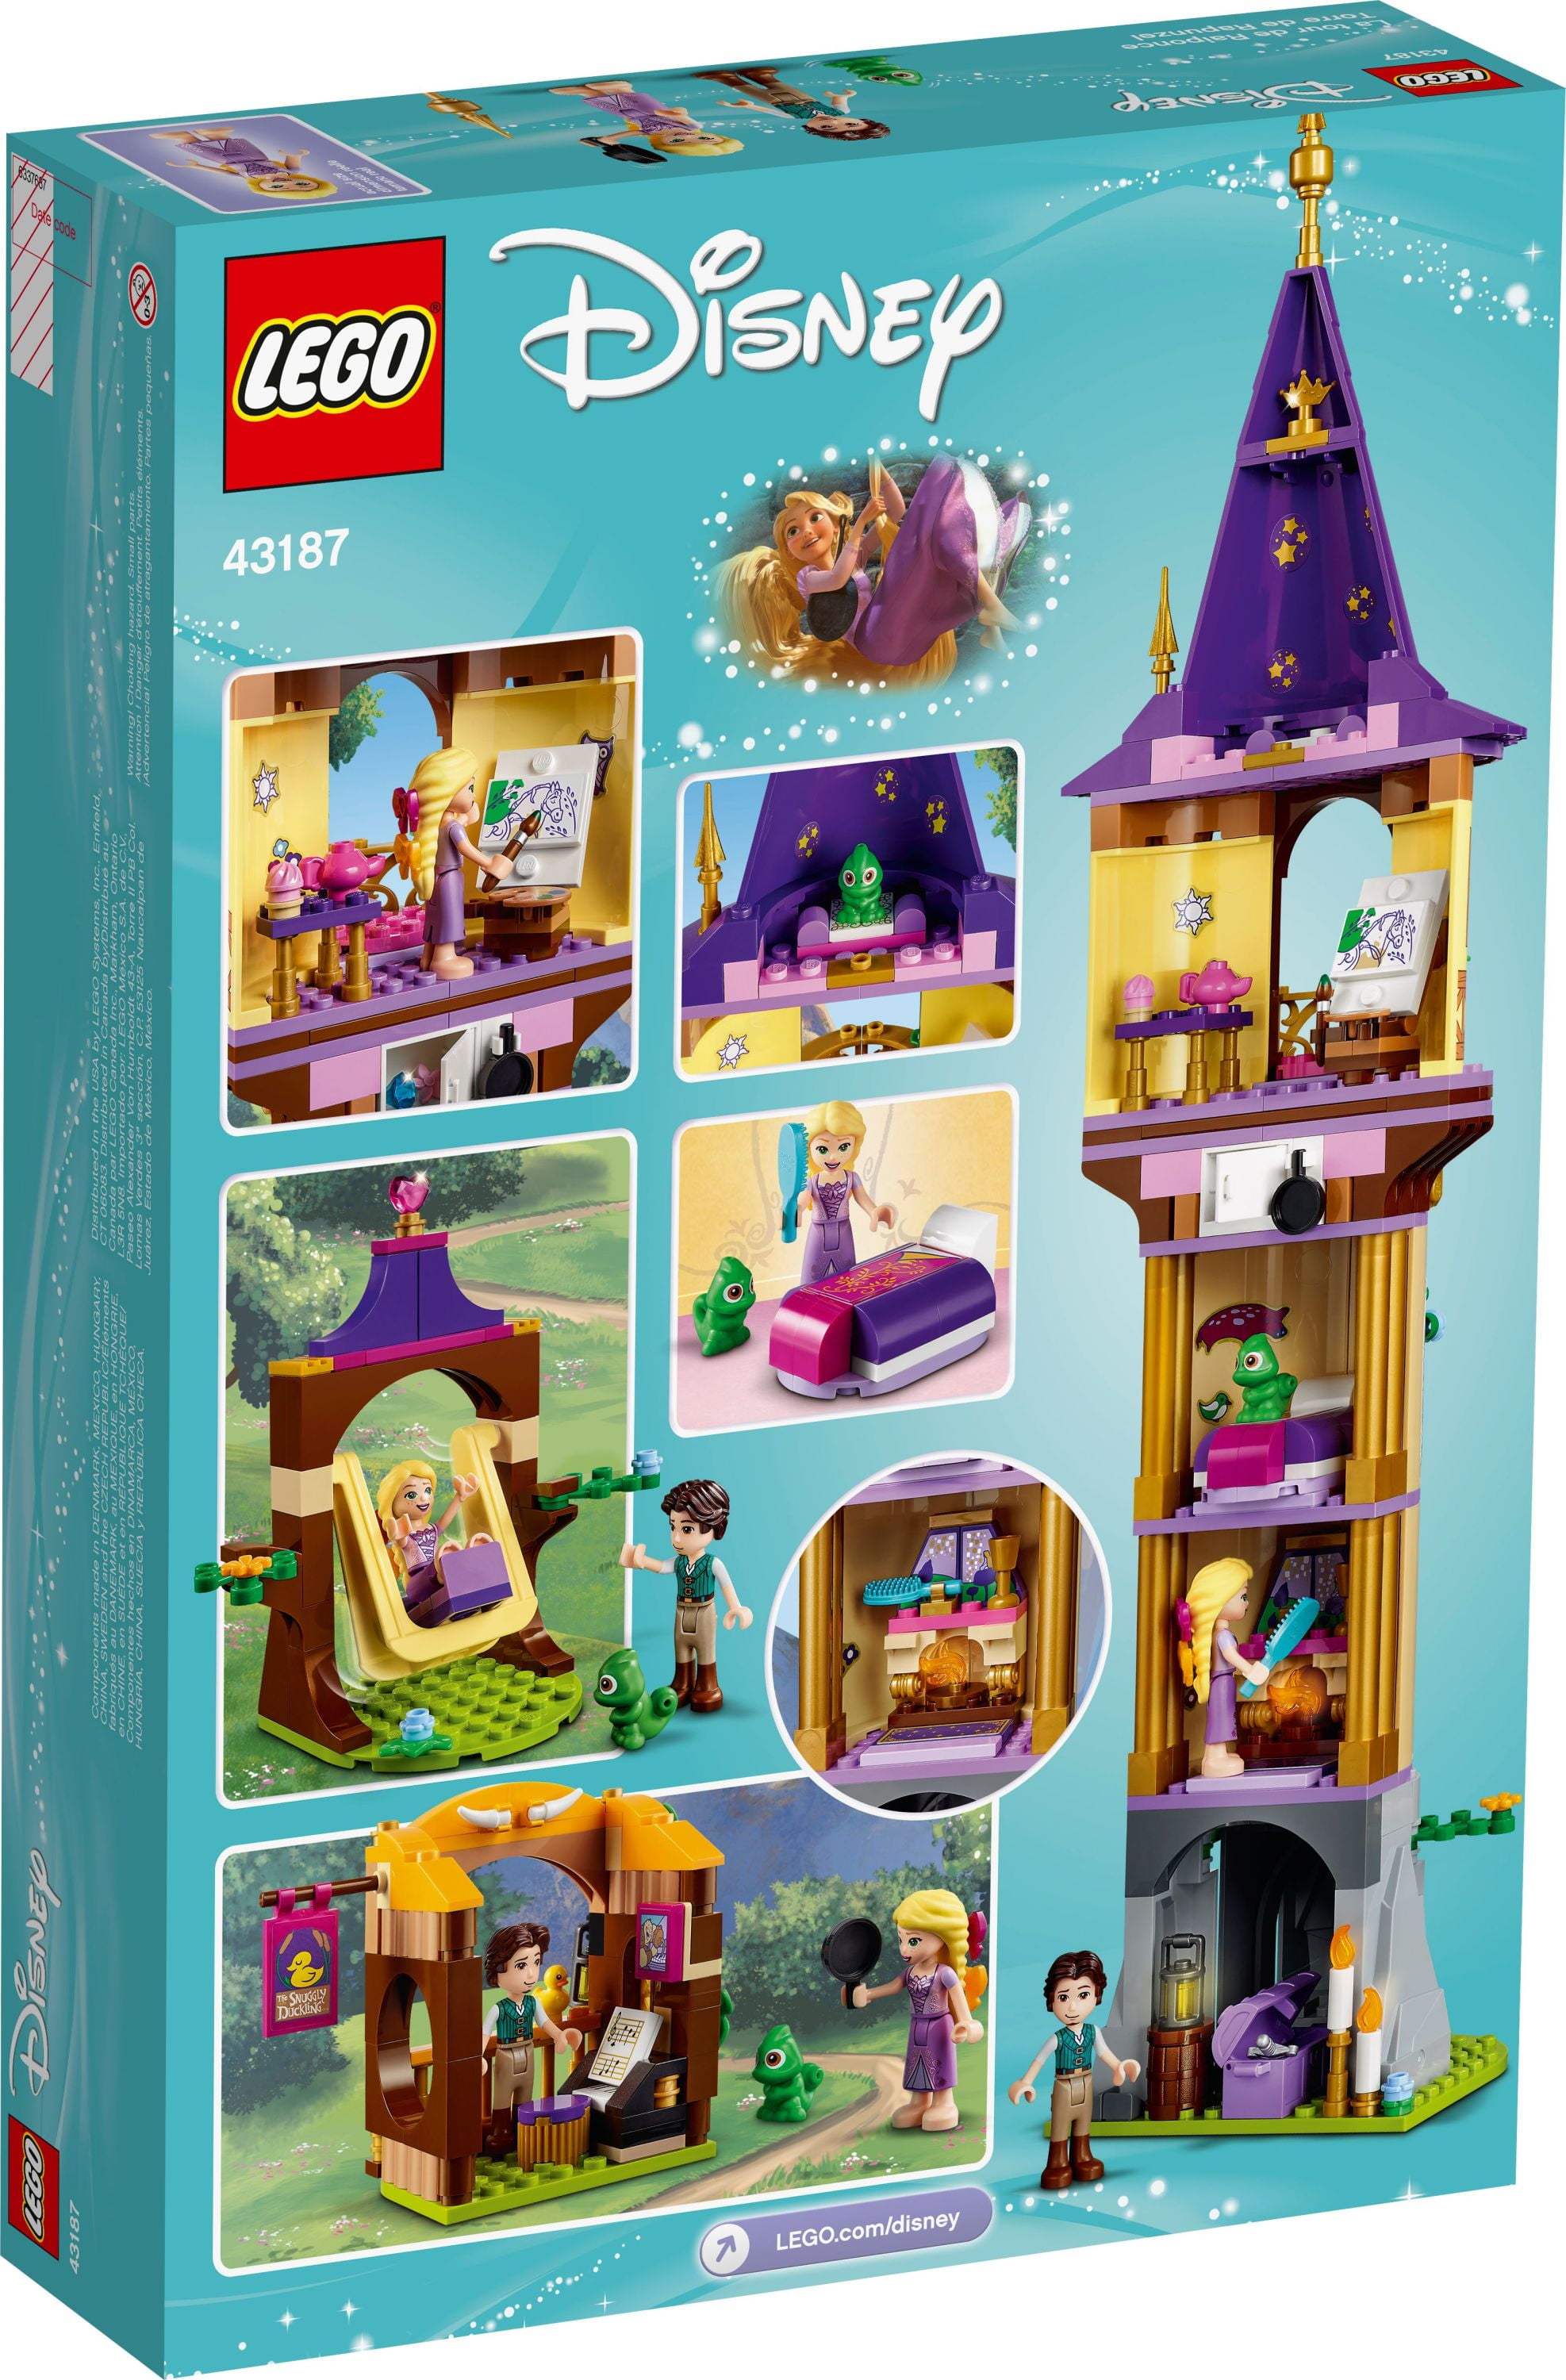 Rapunzel in Rapunzel is Back - LEGO Disney Princess - Minisode